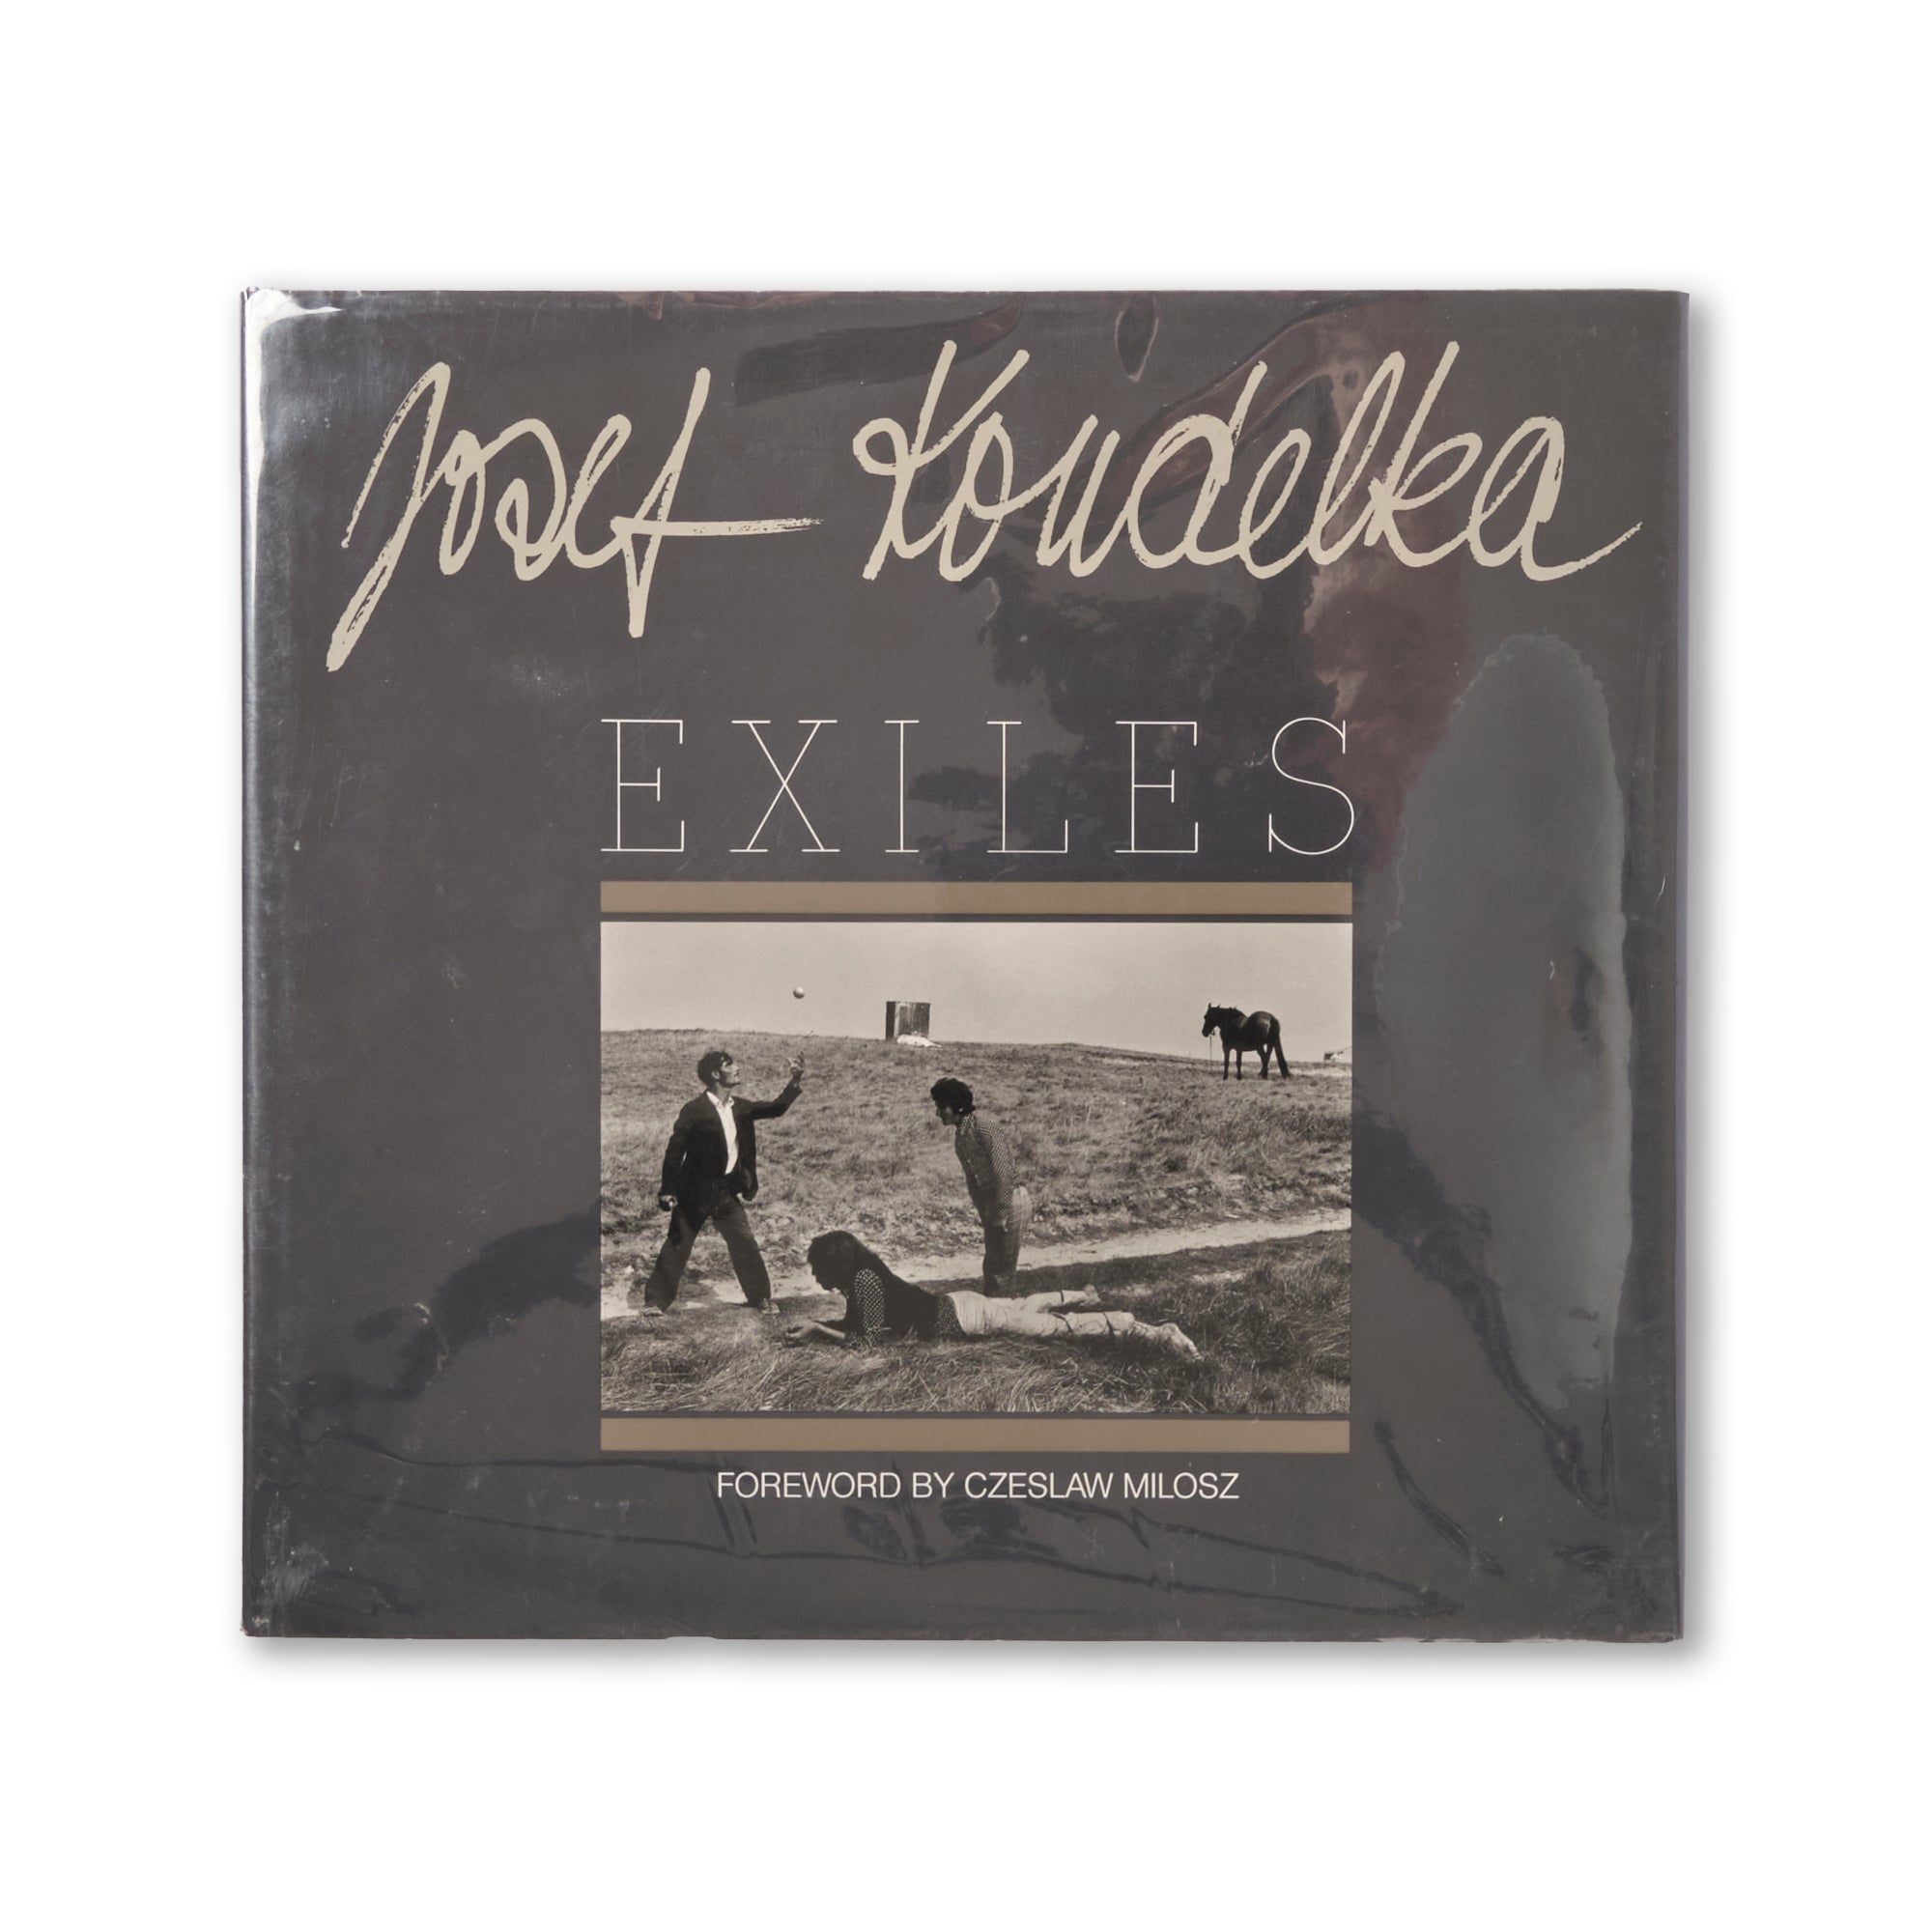 Josef Koudelka – Exiles